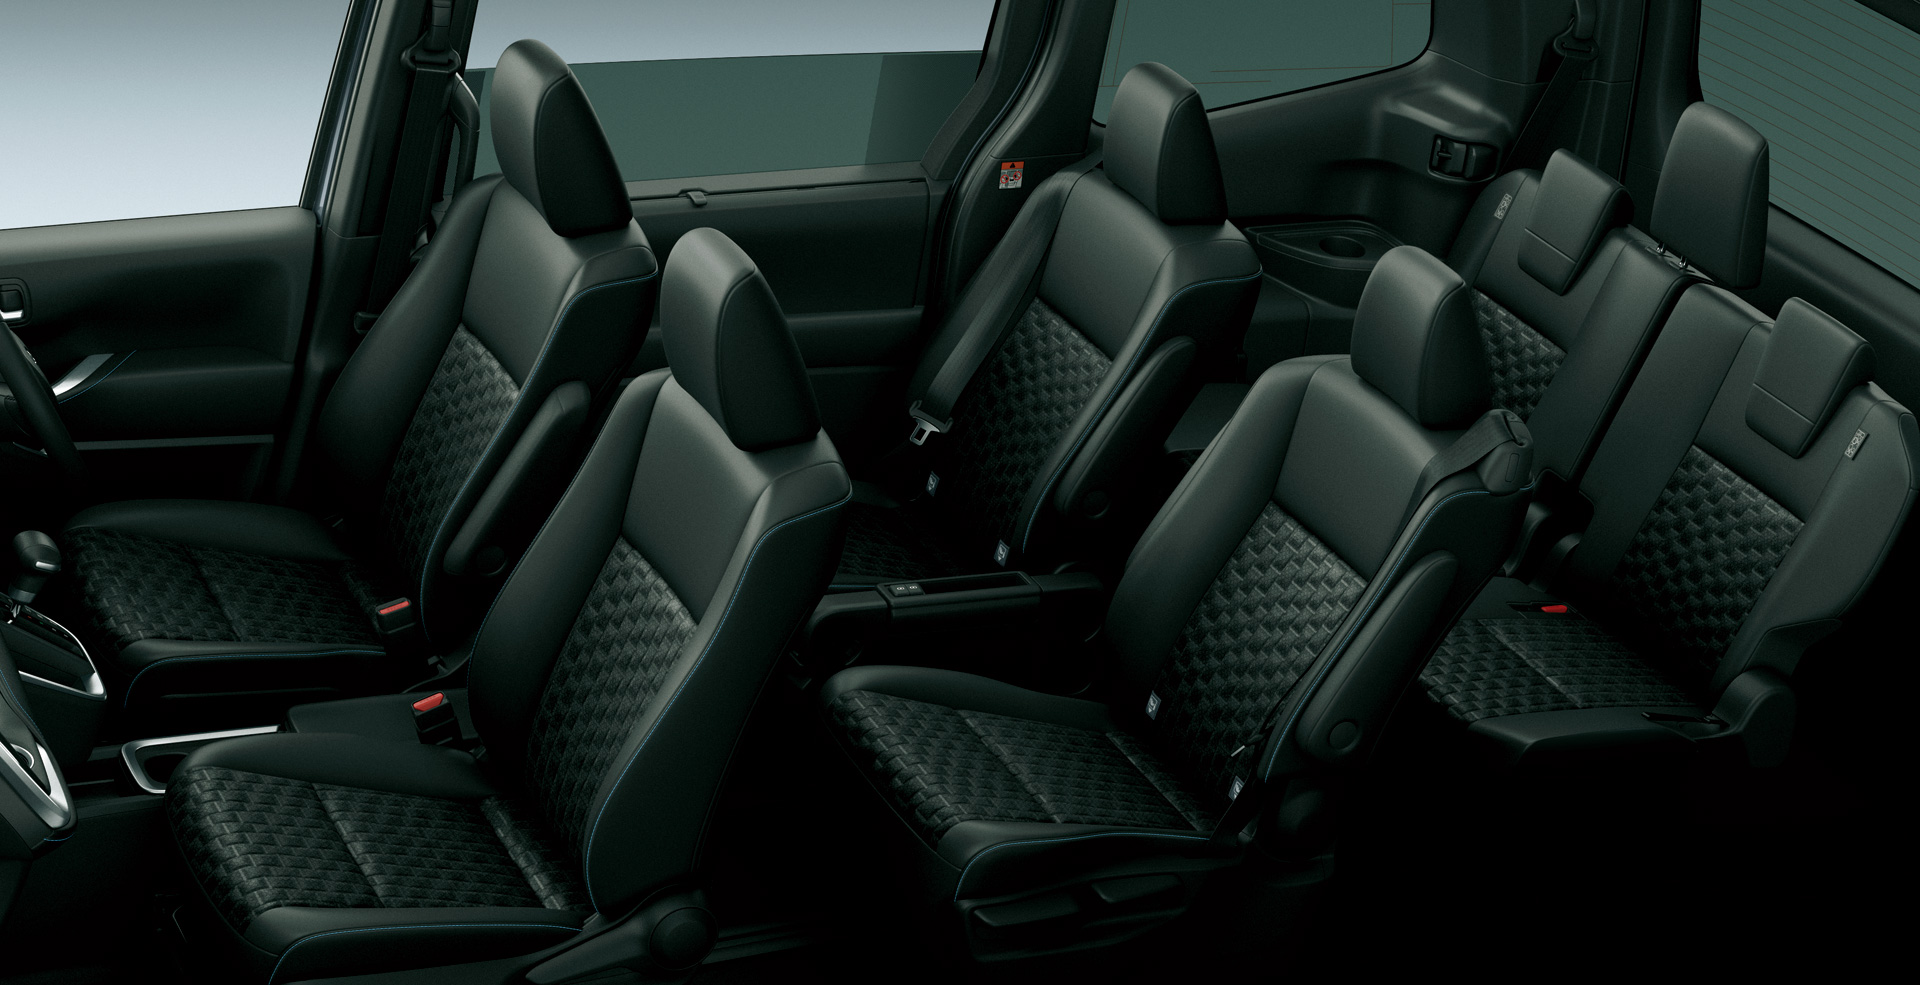 Toyota Noah interior - Seats